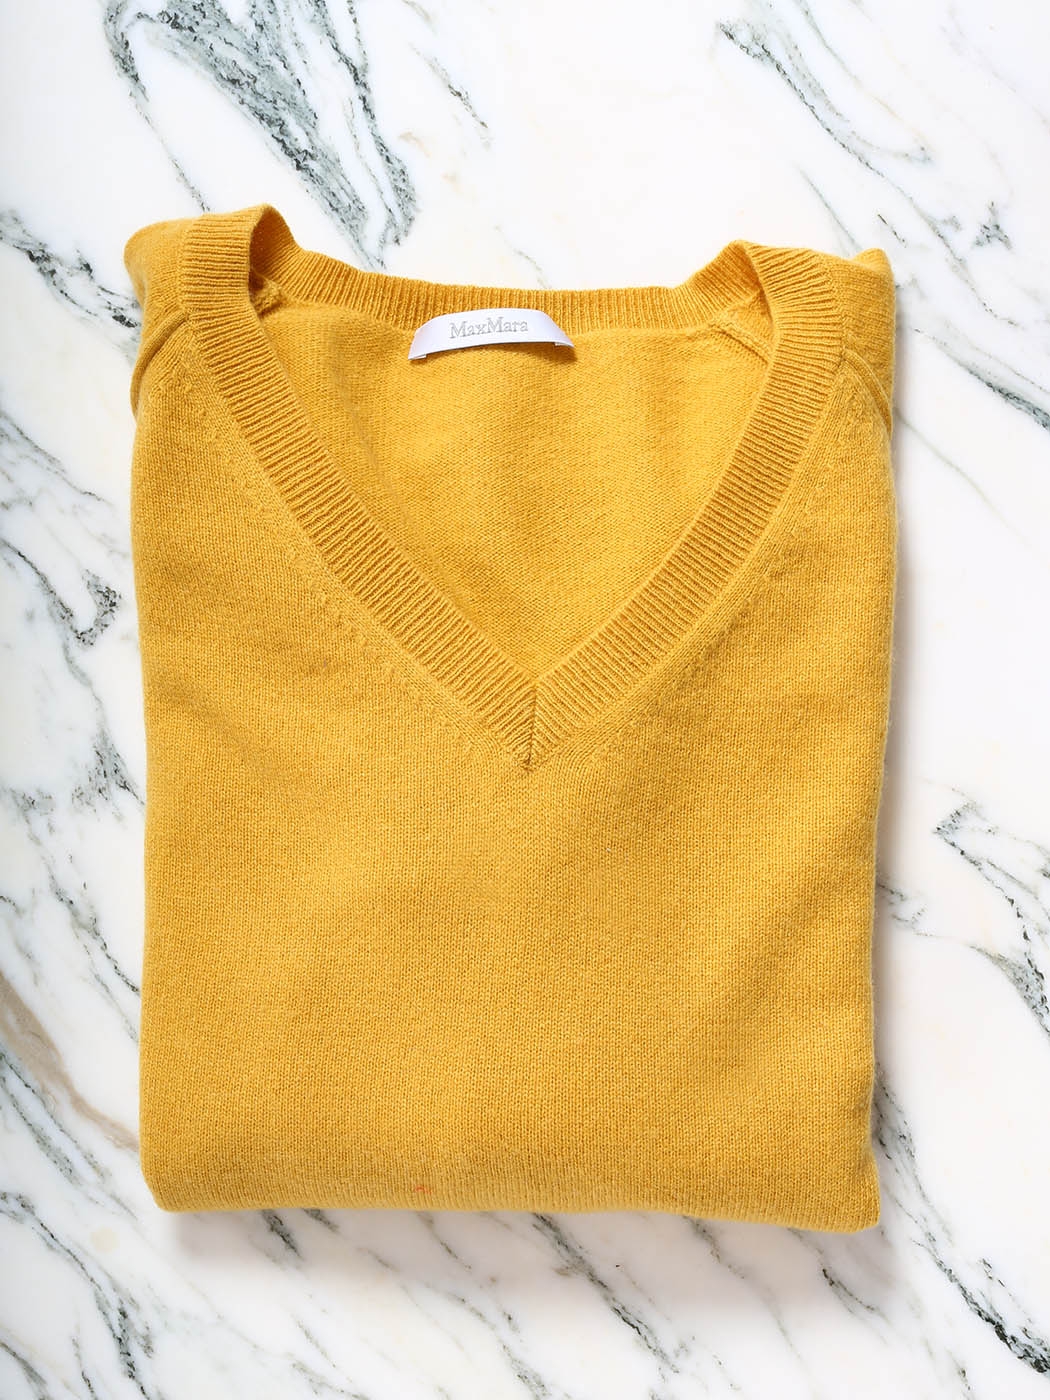 Louise Paris - MAX MARA Mustard yellow cashmere v neckline sweater ...